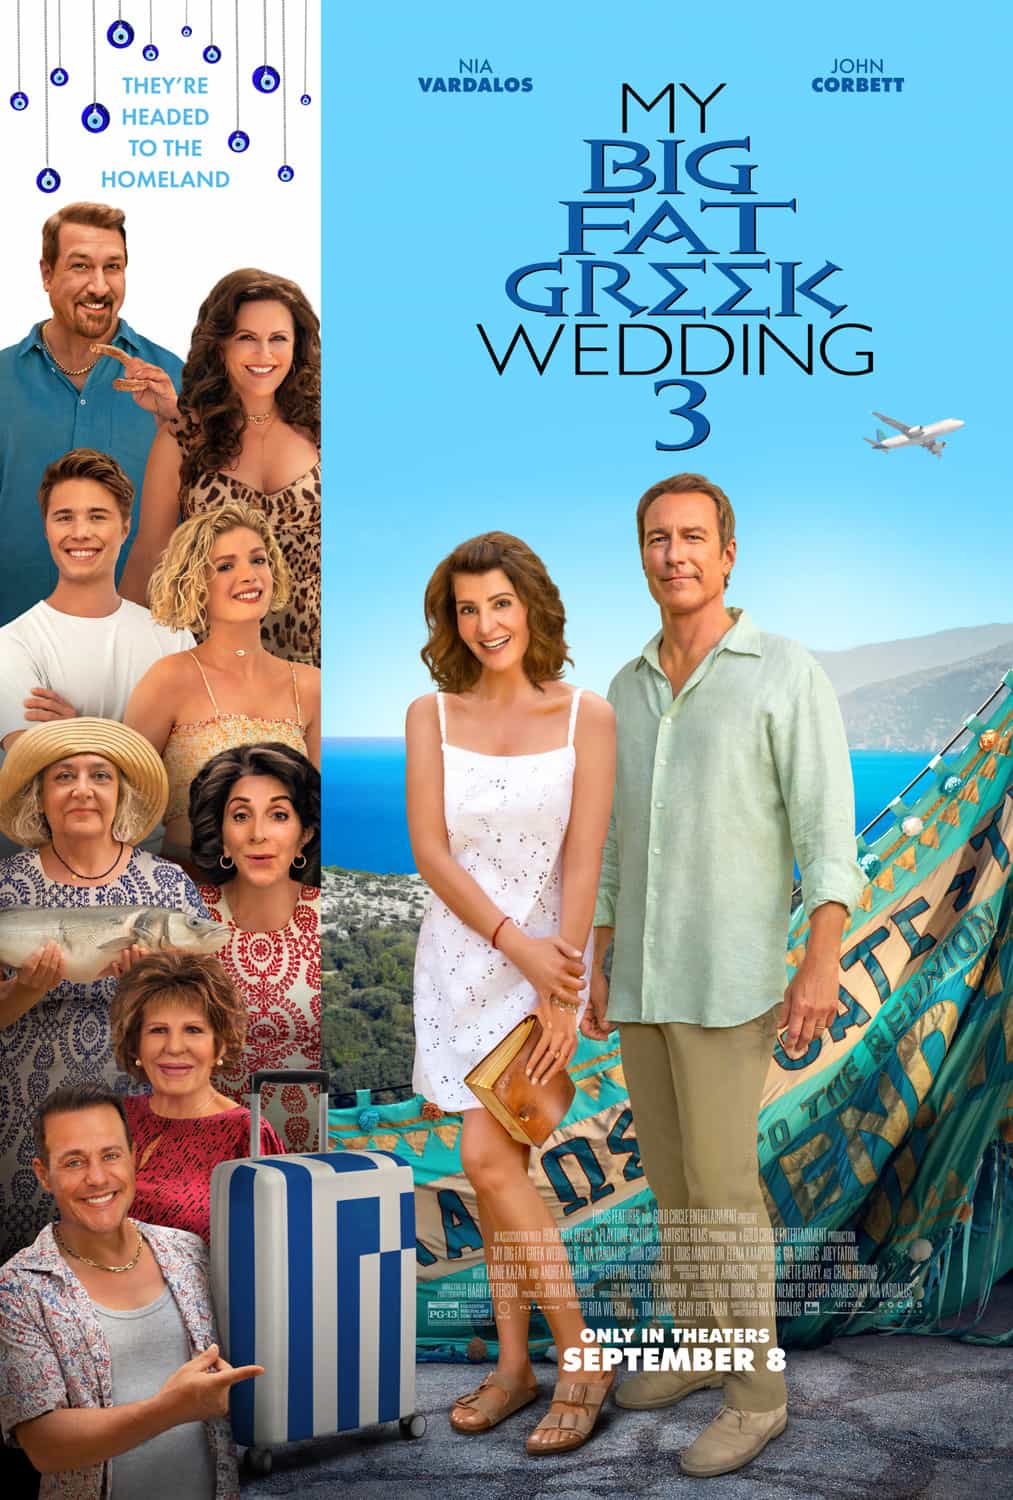 New poster has been released for My Big Fat Greek Wedding 3 which stars Nia Vardalos and John Corbett - movie UK release date 8th September 2023 #mybigfatgreekwedding3